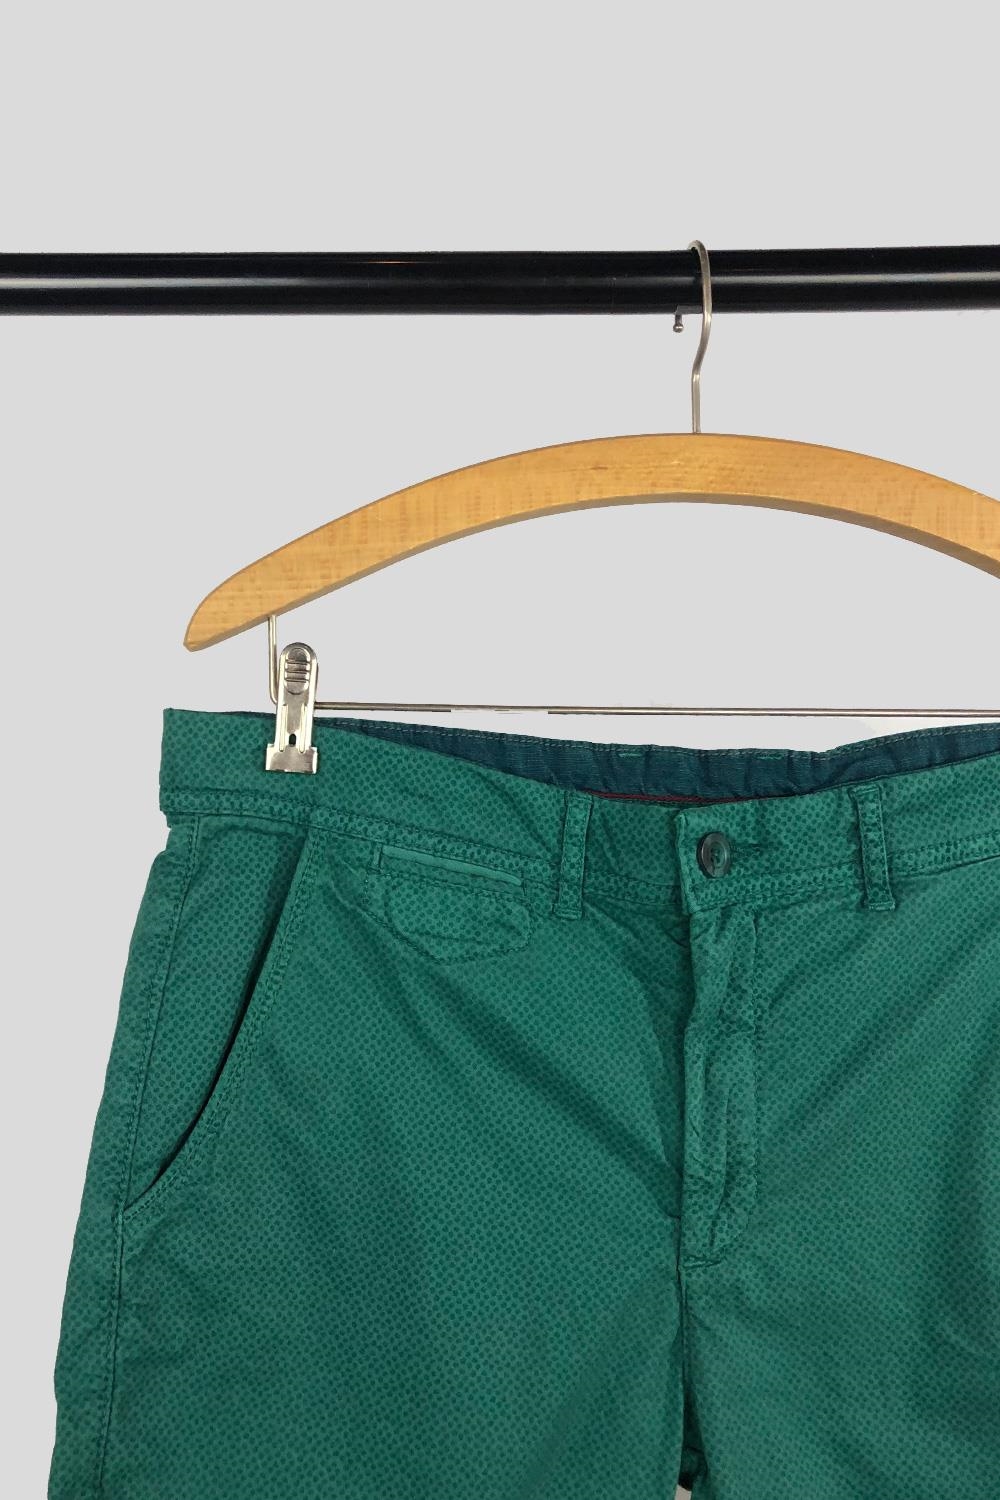 Pantalón corto microdibujo verde | 1604HPBR02/032